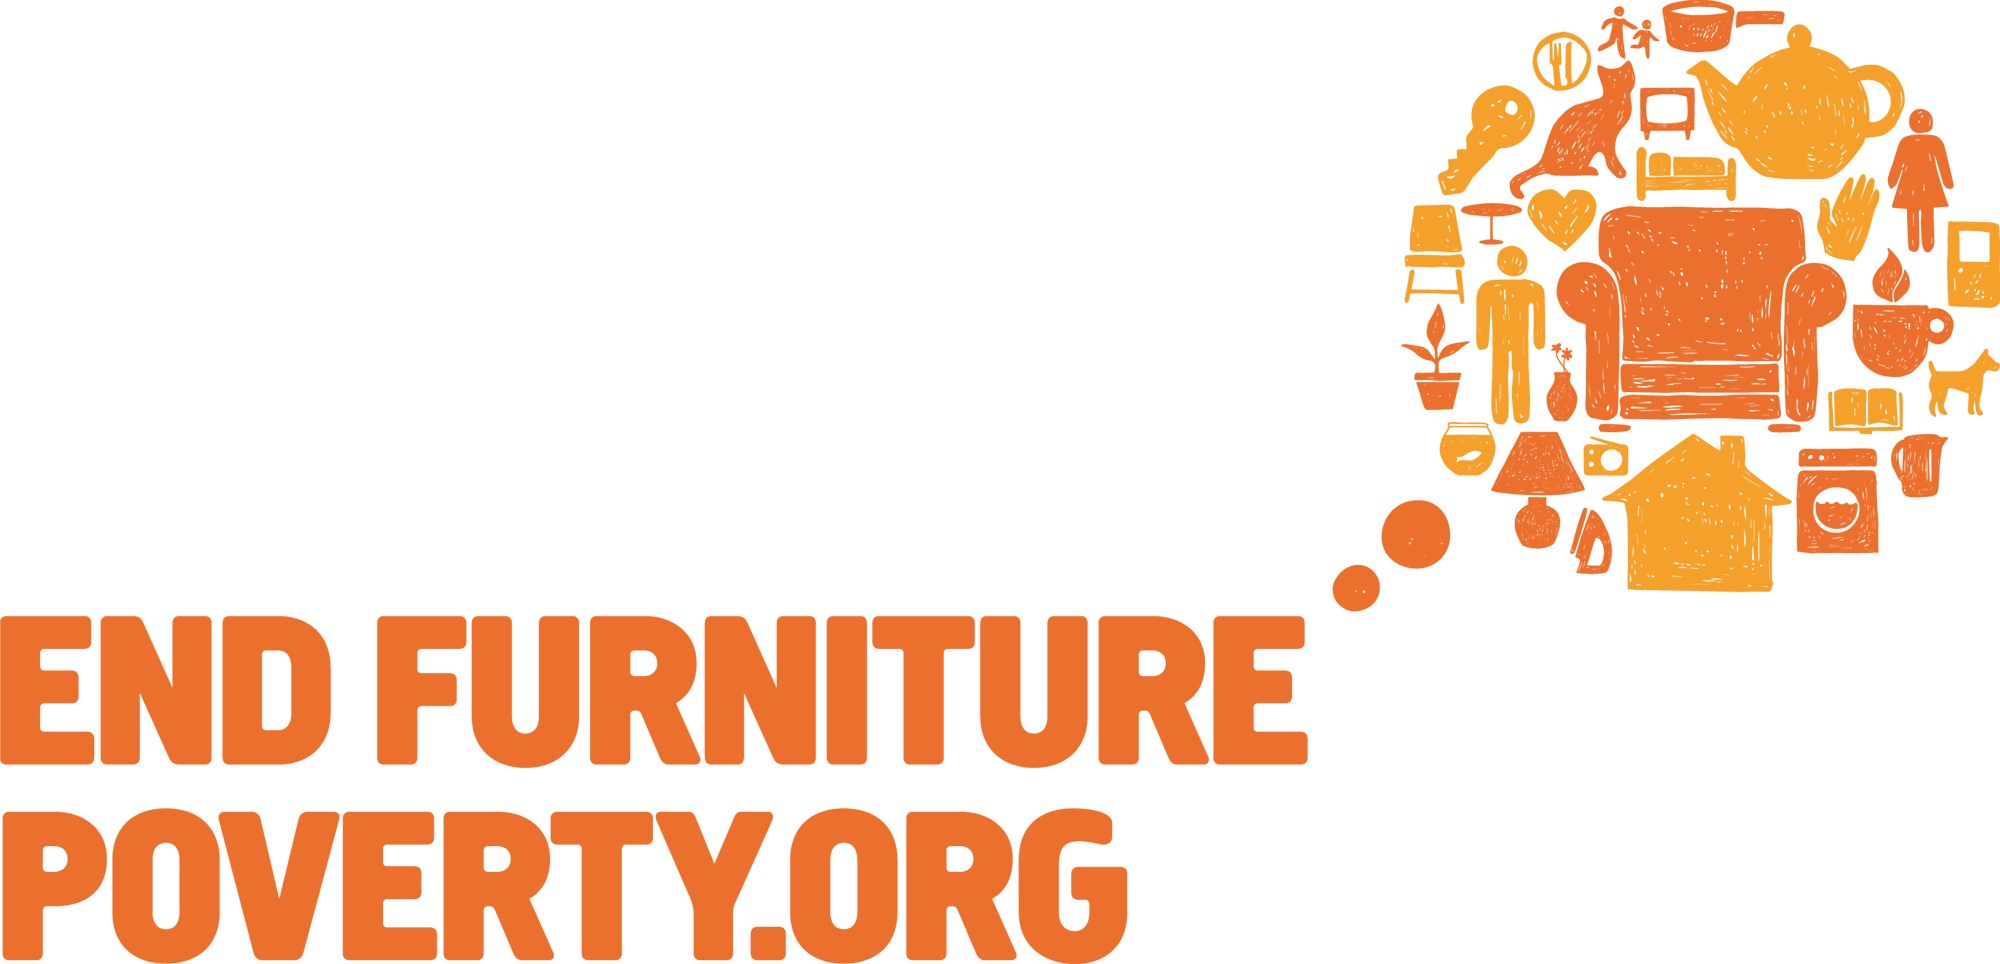 EndFurniturePoverty logo